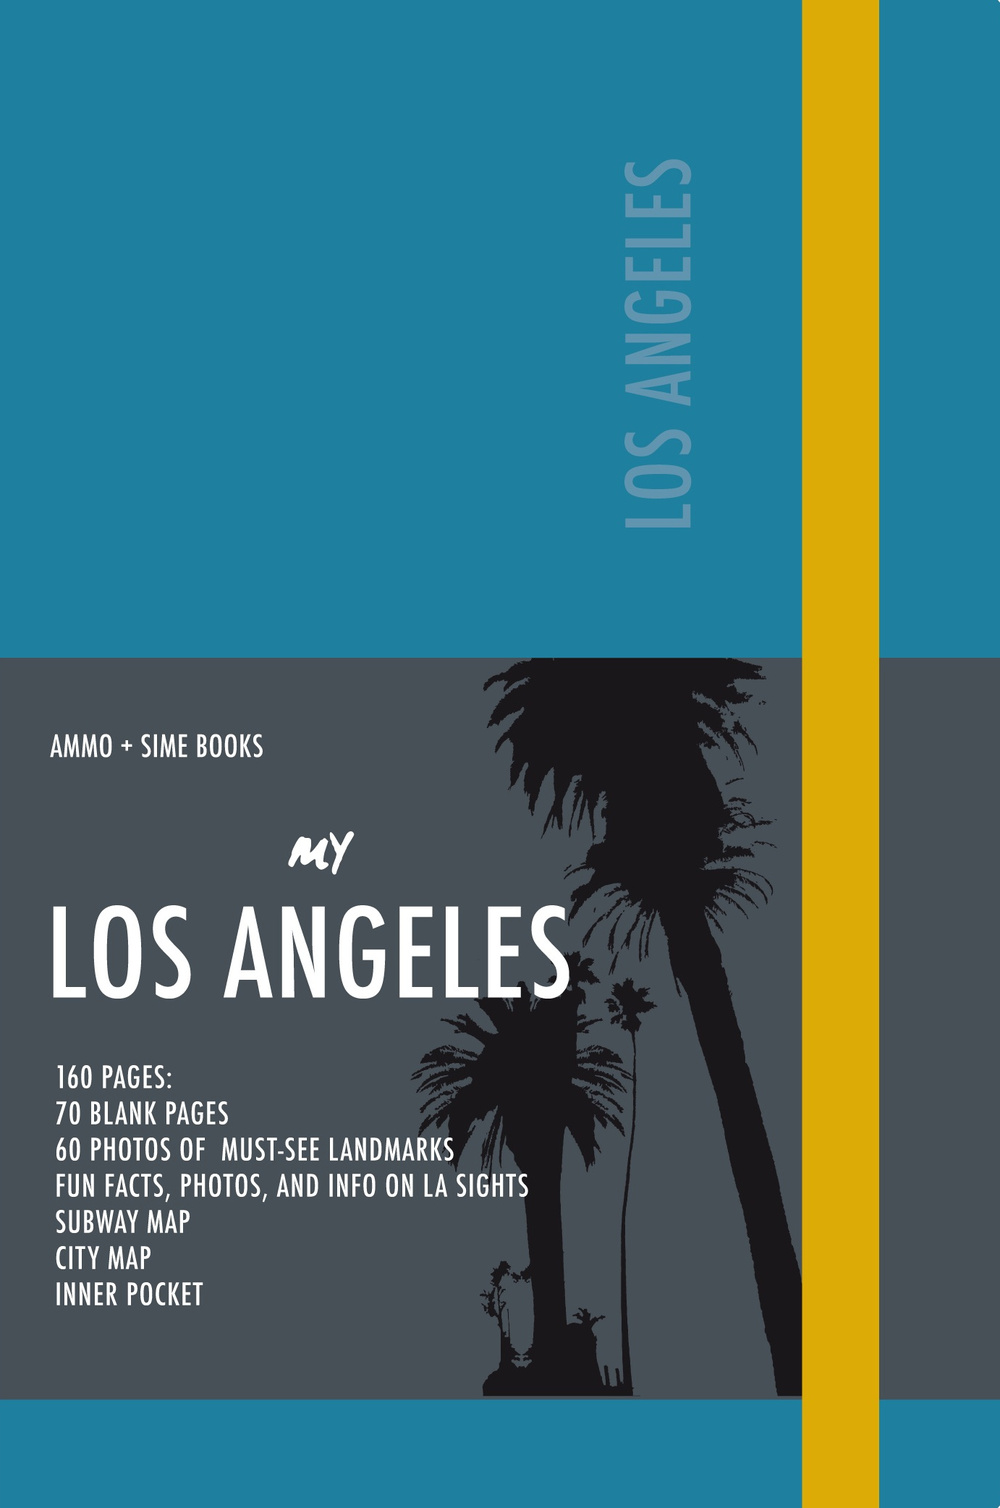 My Los Angeles. Teal blue. Visual book